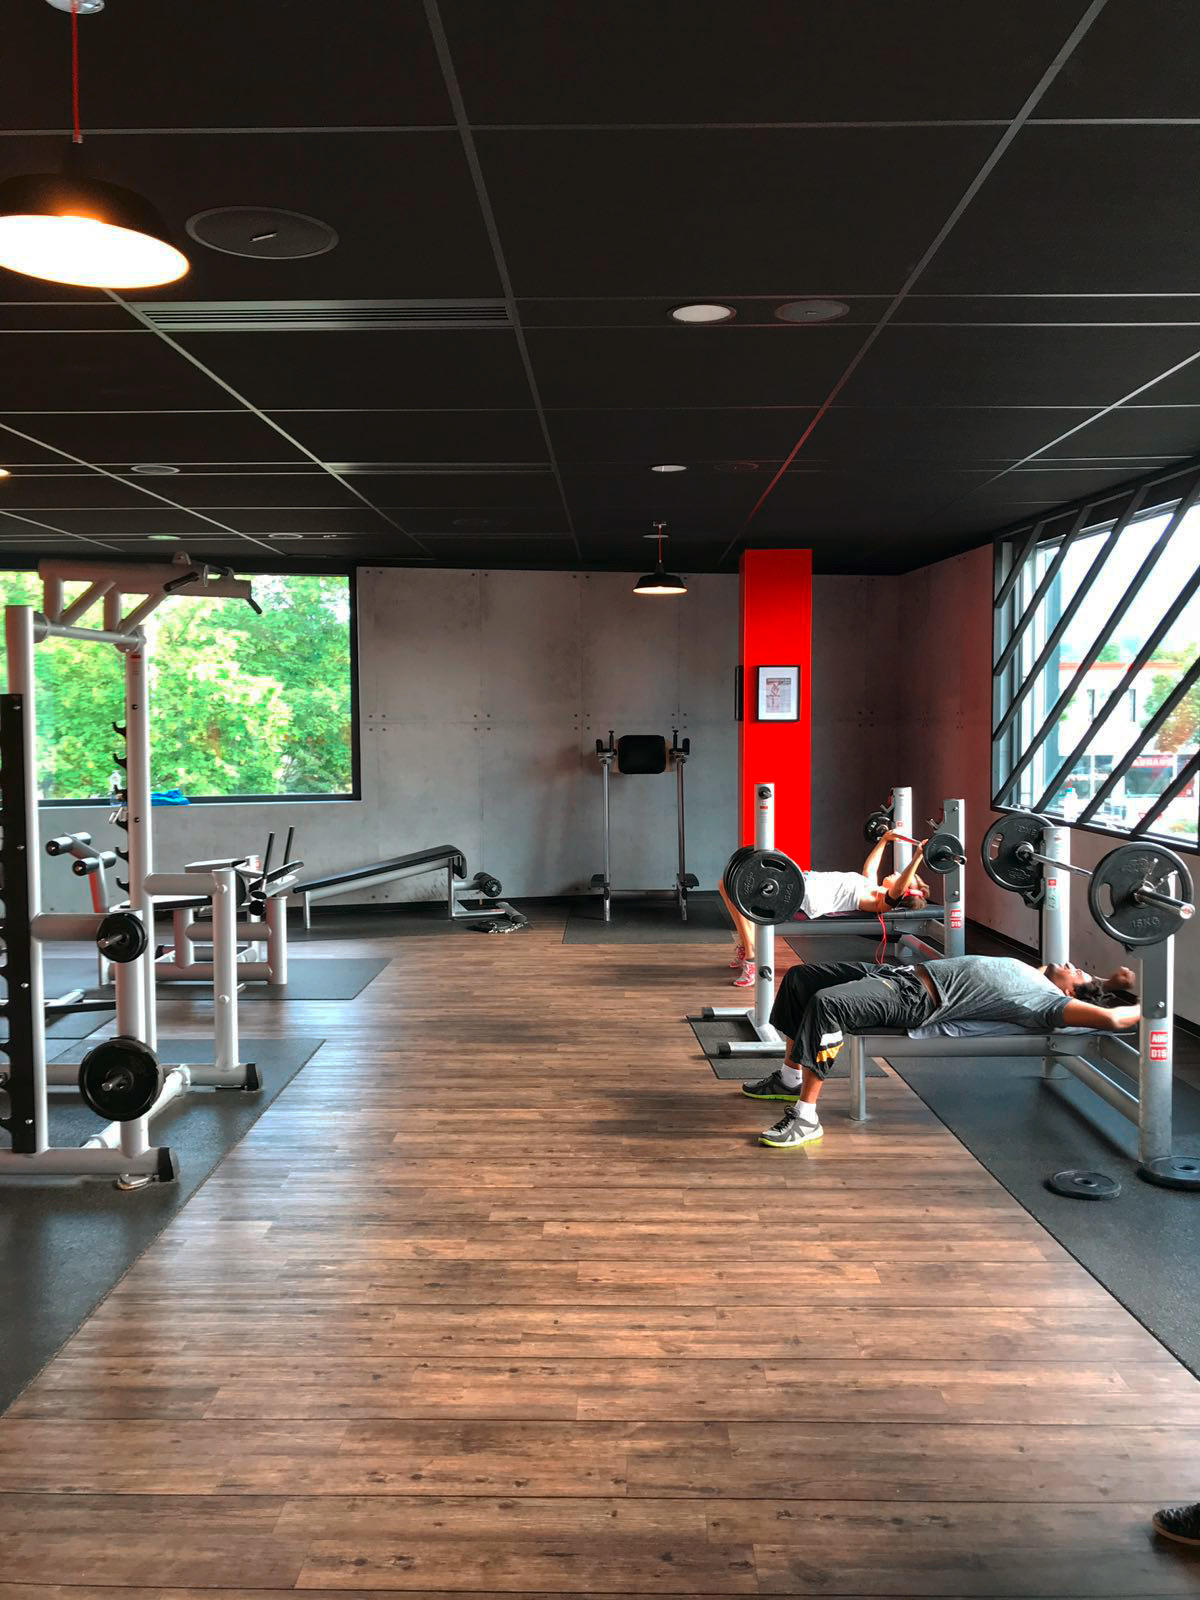 McFIT Fitnessstudio Freiburg im Breisgau, Basler Straße 109 in Freiburg